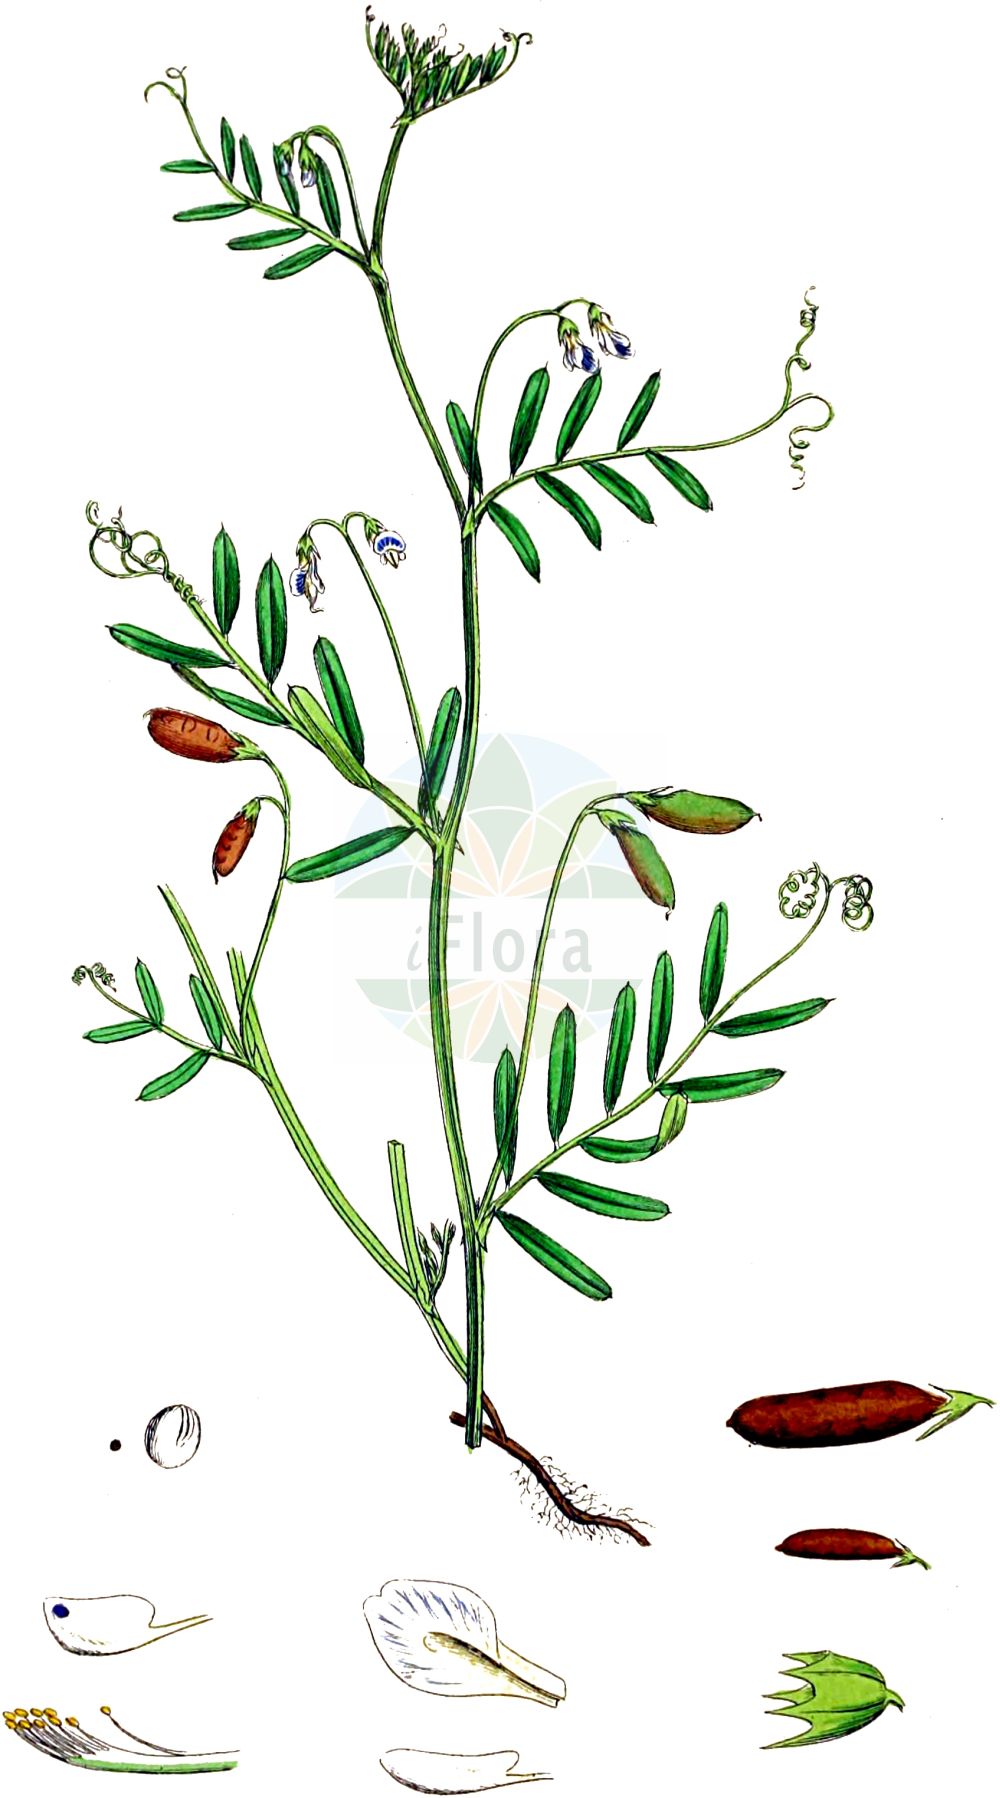 Historische Abbildung von Vicia tetrasperma (Viersamige Wicke - Smooth Tare). Das Bild zeigt Blatt, Bluete, Frucht und Same. ---- Historical Drawing of Vicia tetrasperma (Viersamige Wicke - Smooth Tare). The image is showing leaf, flower, fruit and seed.(Vicia tetrasperma,Viersamige Wicke,Smooth Tare,Ervum tenuissimum,Ervum tetraspermum,Vicia gemella,Vicia tetrasperma,Vicia tetrasperma var. gracilis,Viersamige Wicke,Viersamige Wicke,Smooth Tare,Four-seed Vetch,Lentil Vetch,Lentil Tare,Slender Vetch,Sparrow Vetch,Vicia,Wicke,Vetch,Fabaceae,Schmetterlingsblütler,Pea family,Blatt,Bluete,Frucht,Same,leaf,flower,fruit,seed,Sowerby (1790-1813))